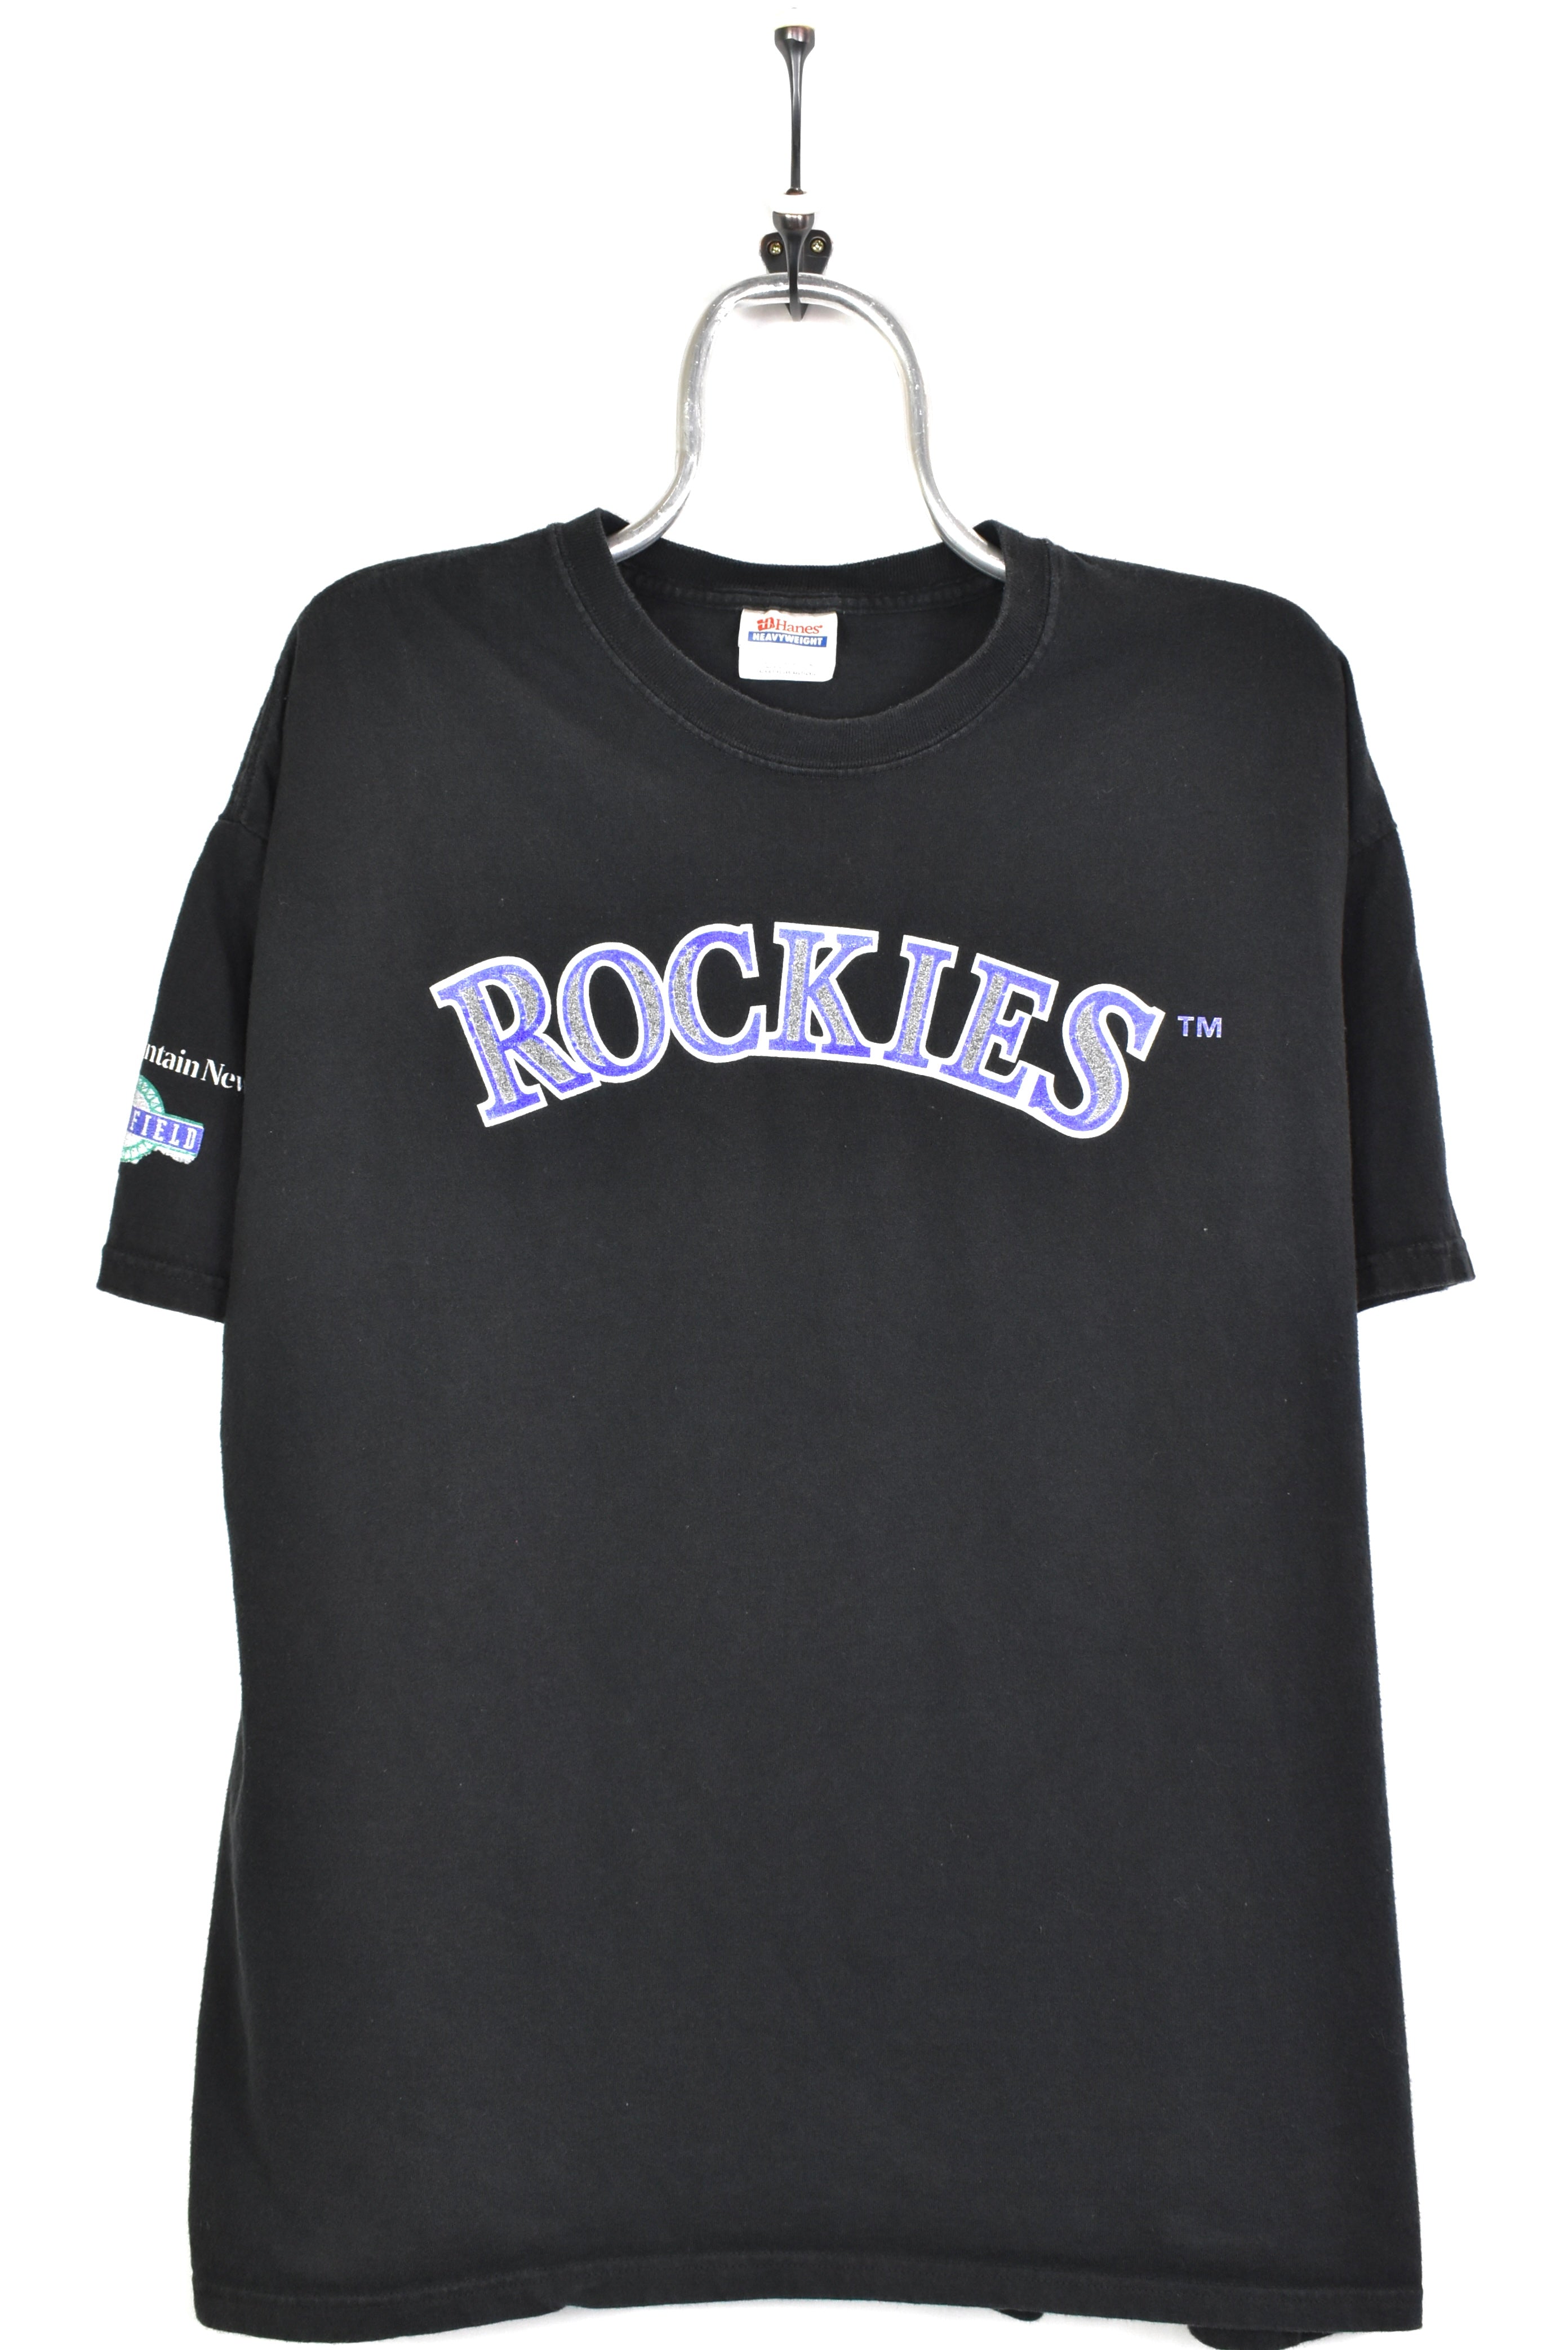 Vintage Colorado Rockies shirt, MLB graphic tee - large, black PRO SPORT